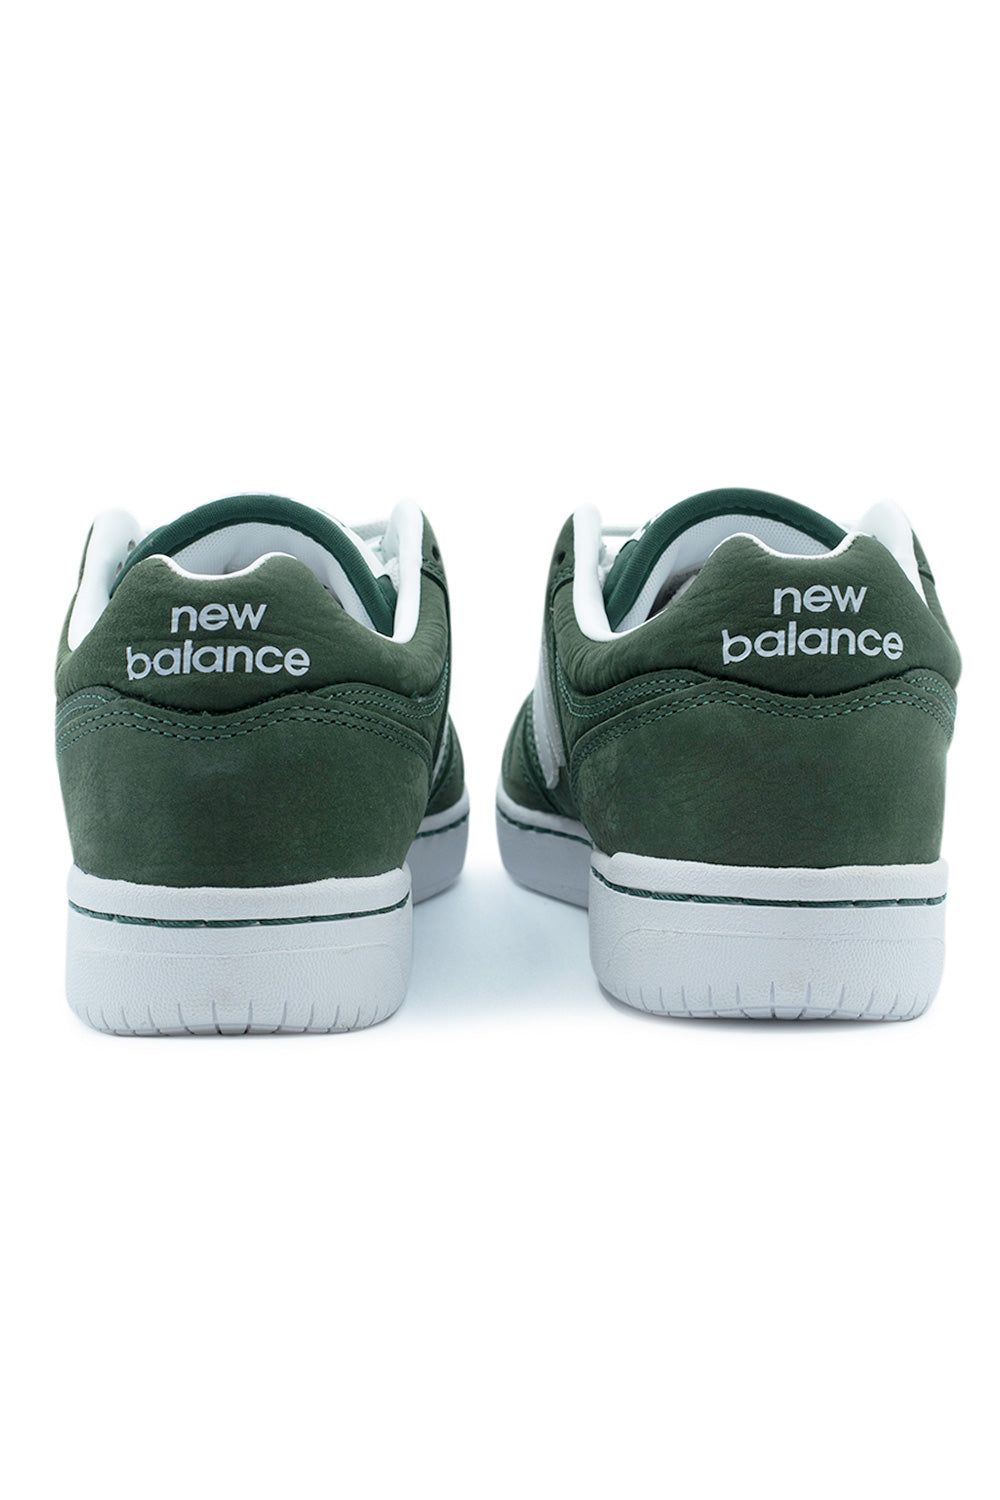 New Balance Numeric 480 Future Shoe Forrest Green / White - BONKERS